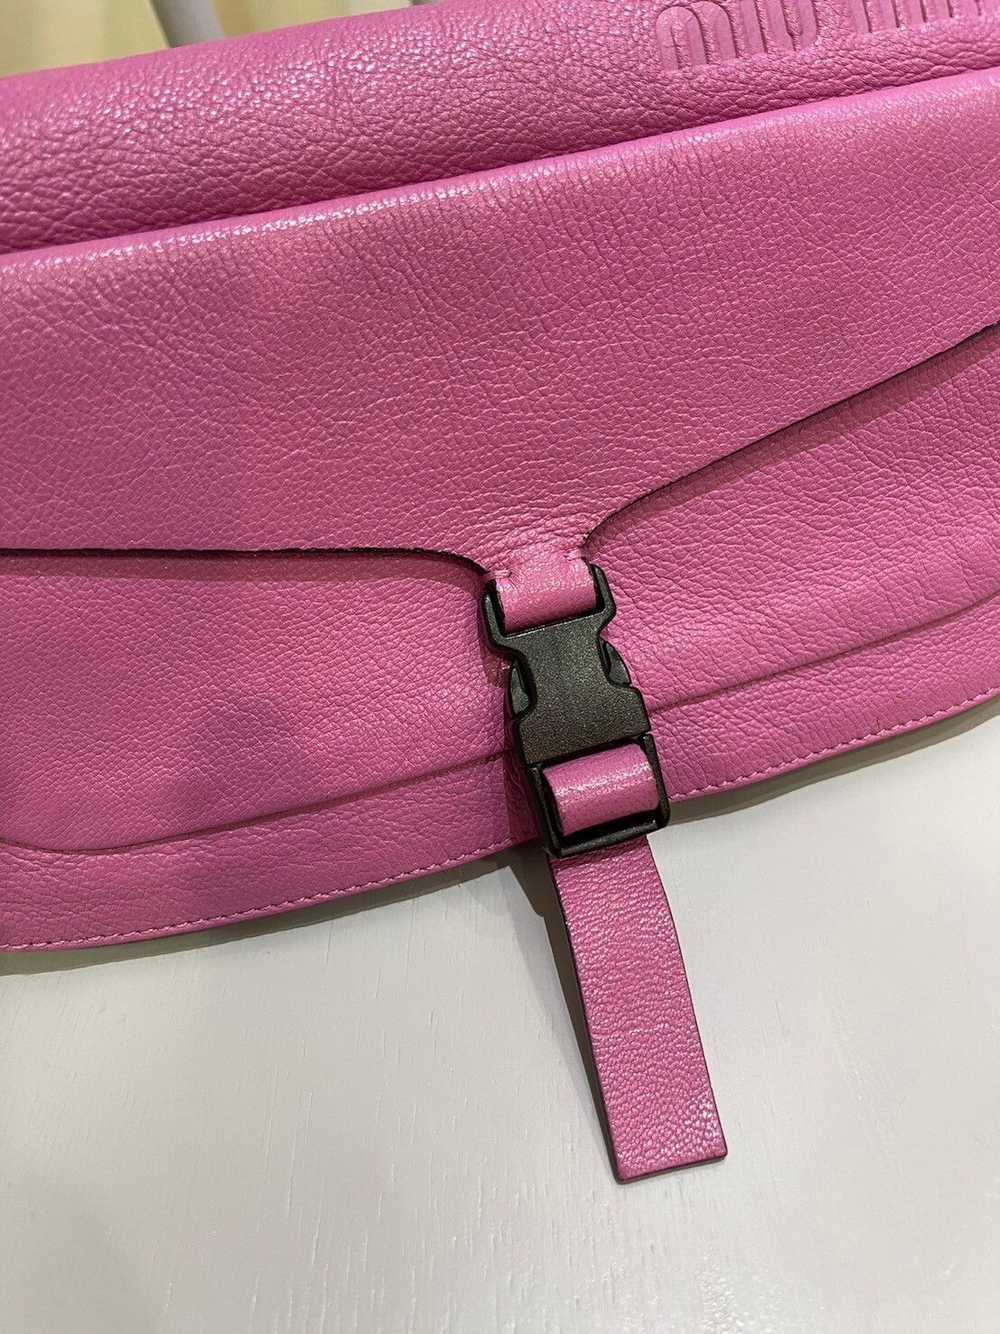 Miu Miu Miu Miu S/S 2000 Sport Style Pink Leather… - image 11